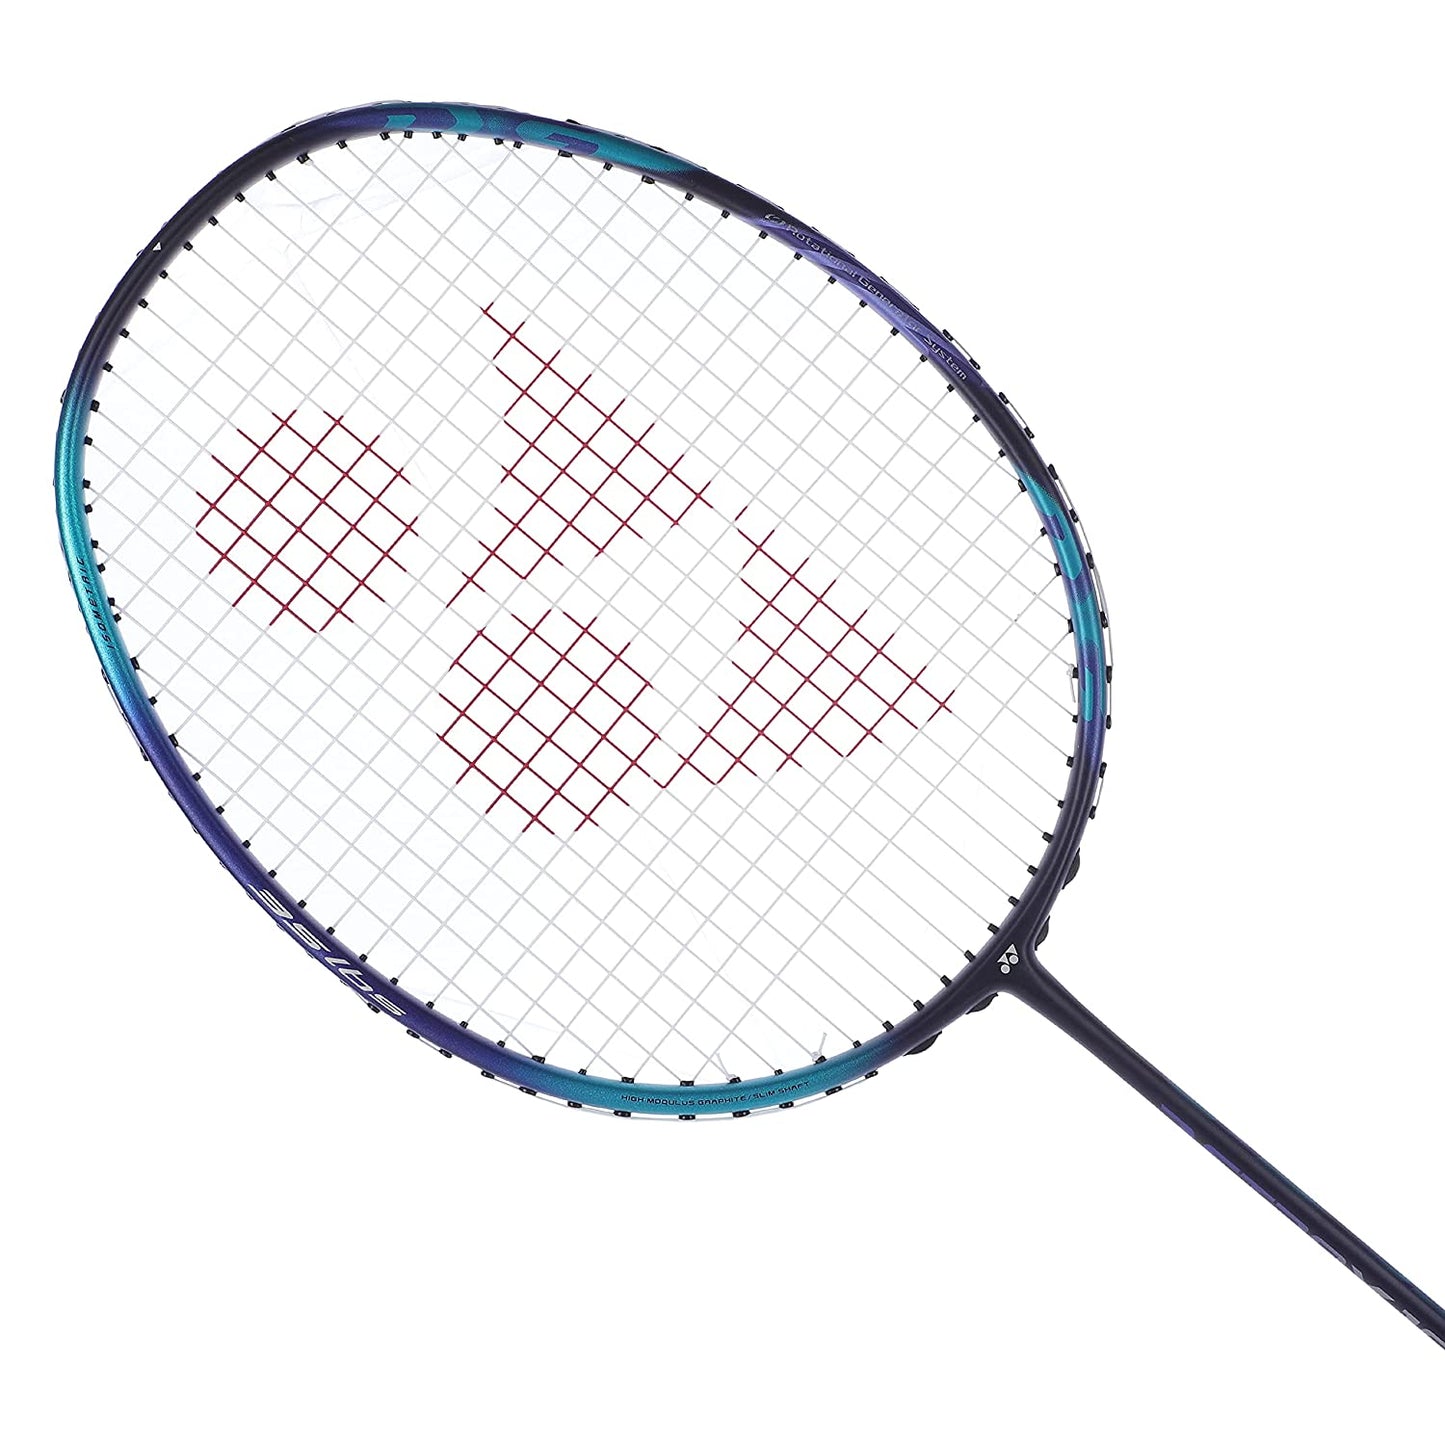 Yonex Astrox 10 DG (Navy Turquoise) Strung Badminton Racket